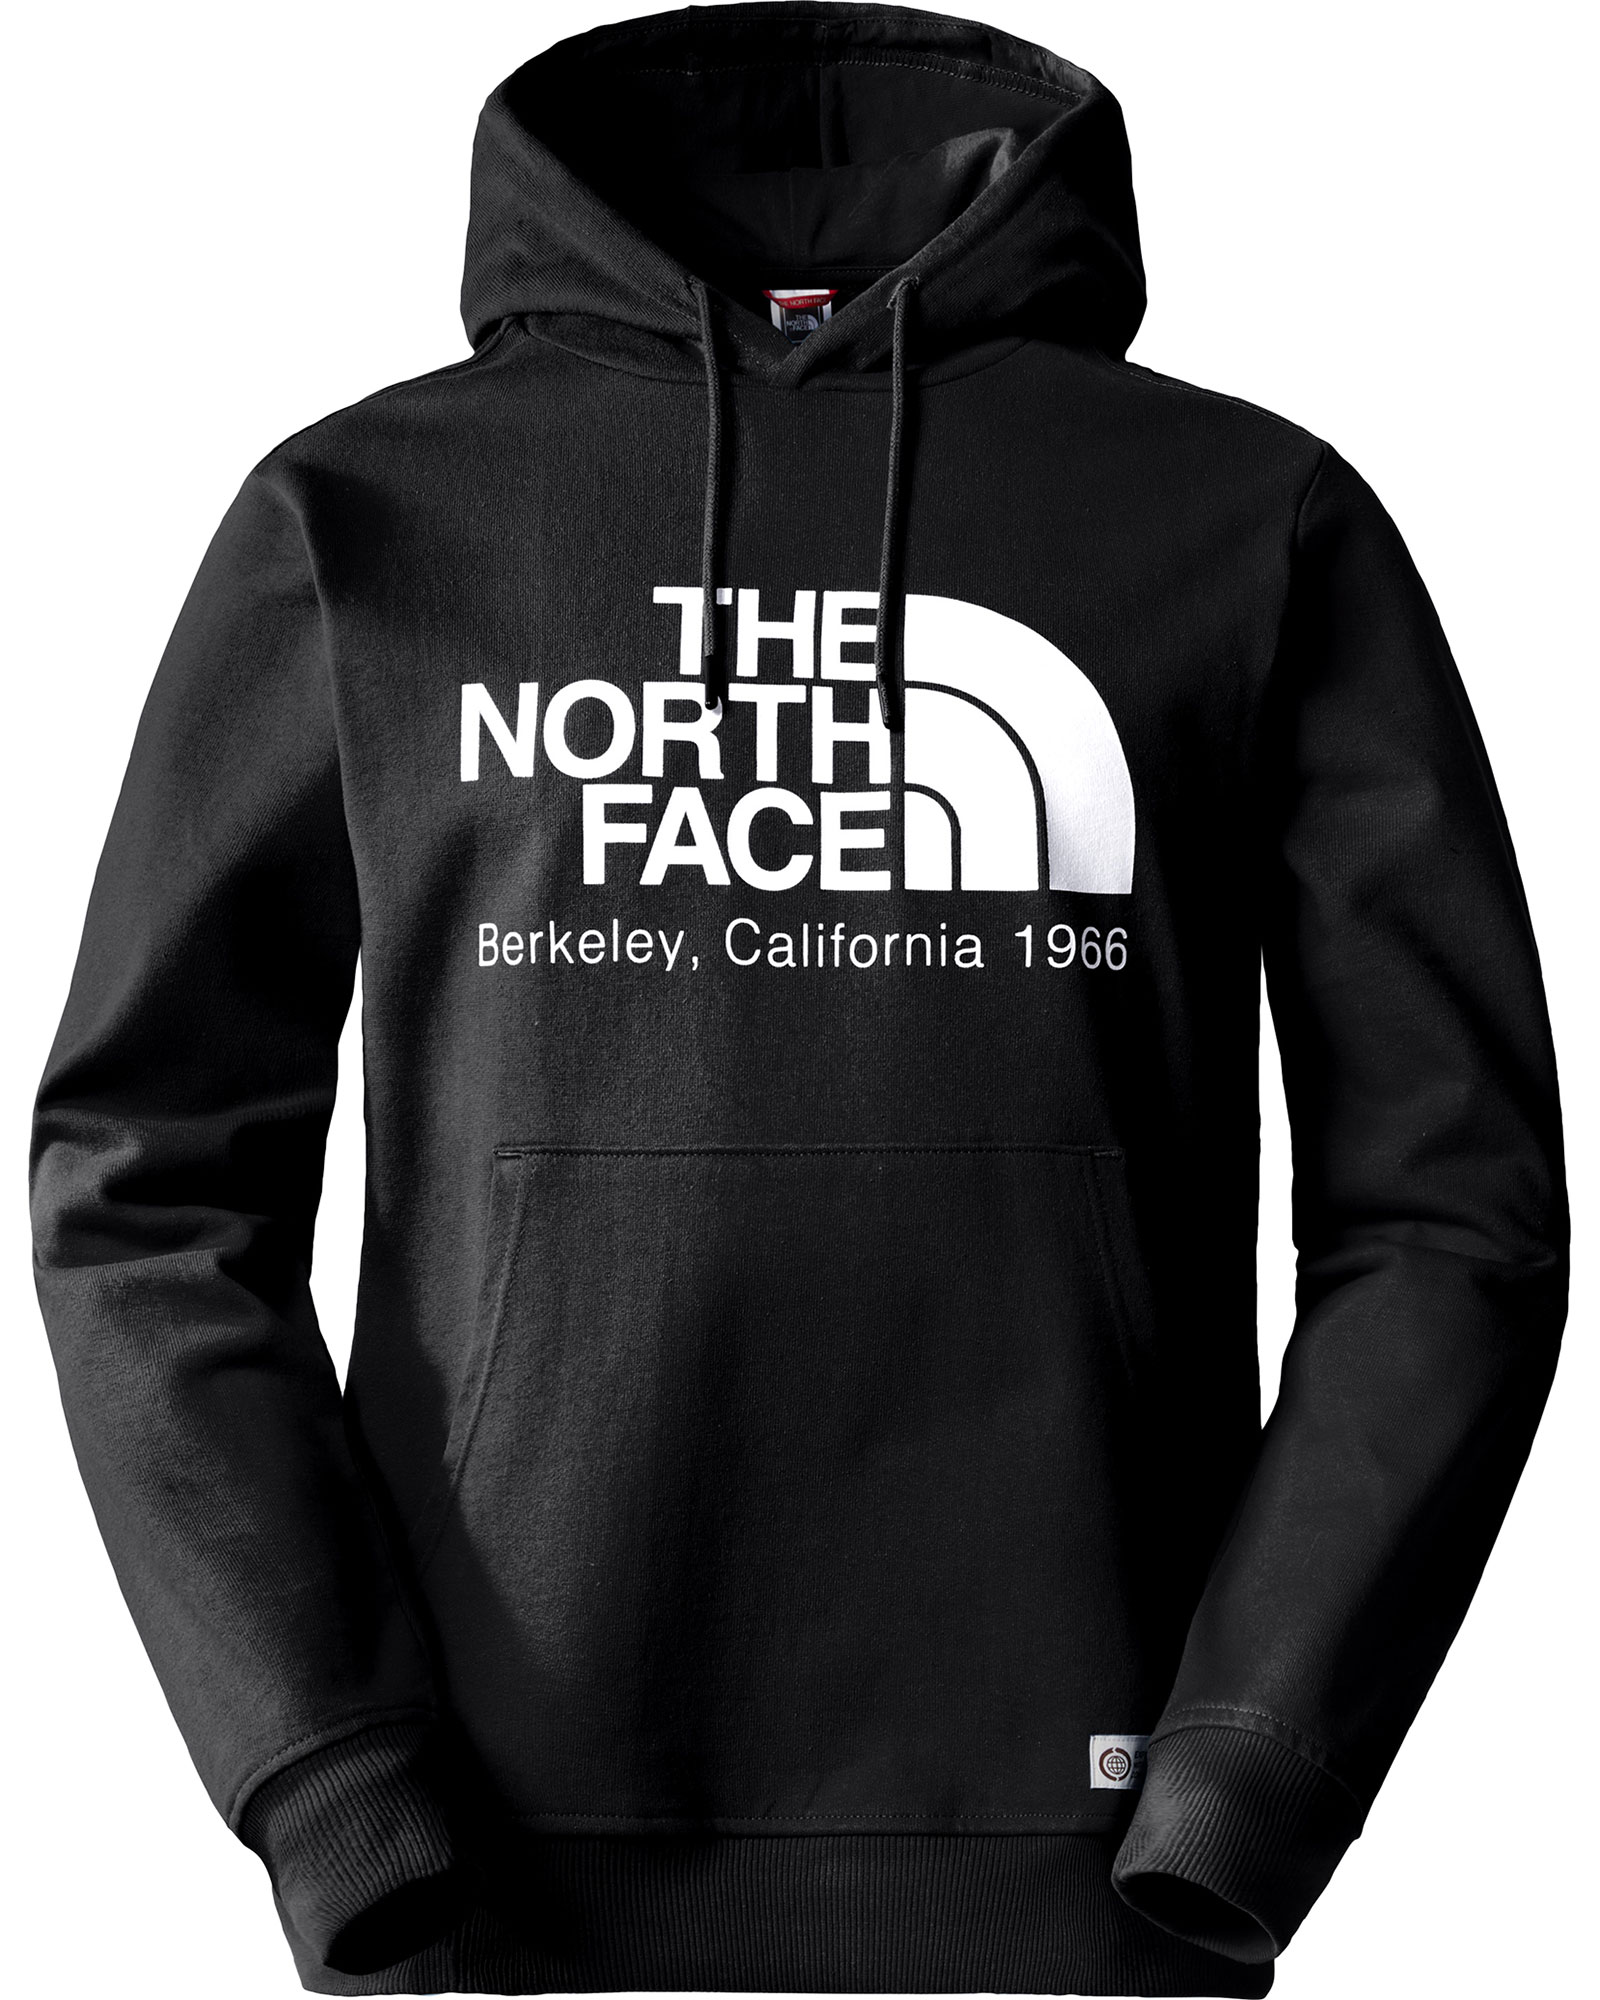 The North Face Men’s Berkeley California Hoodie - TNF Black S